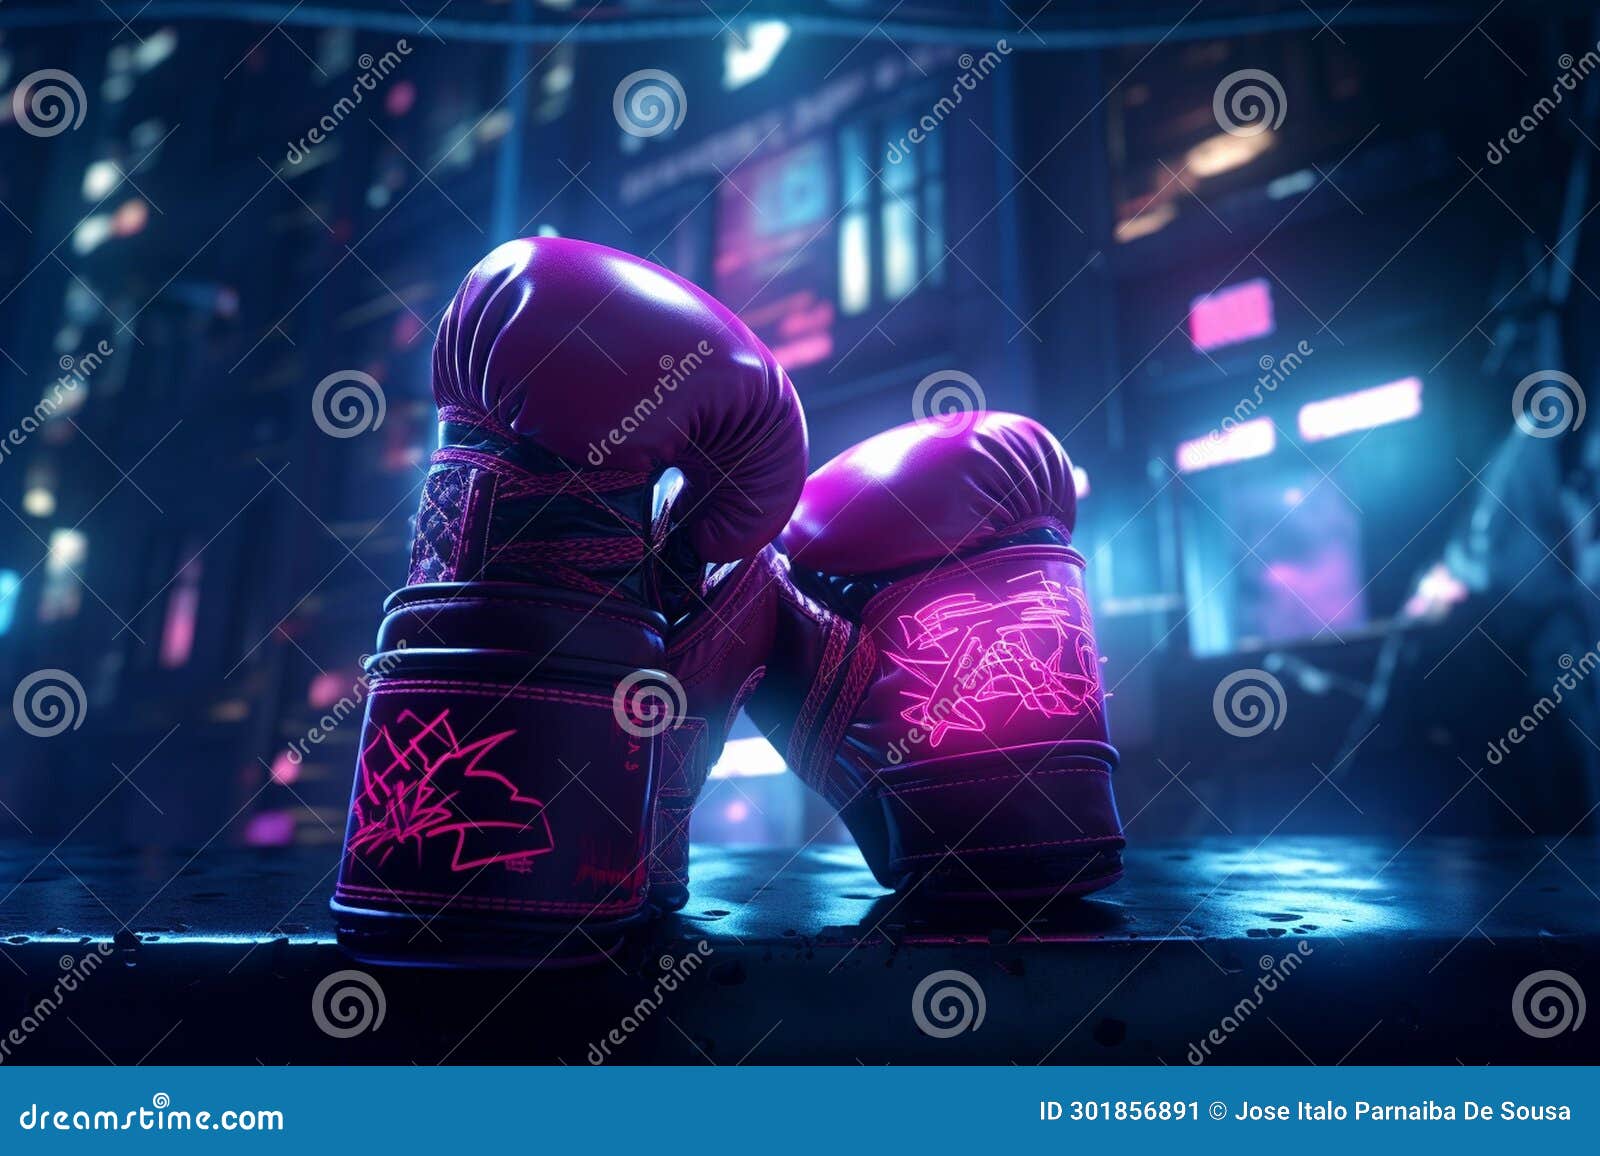 joven masculino patada Boxer. muscular hombre en ropa de deporte y boxeo  guantes. 35819341 Vector en Vecteezy